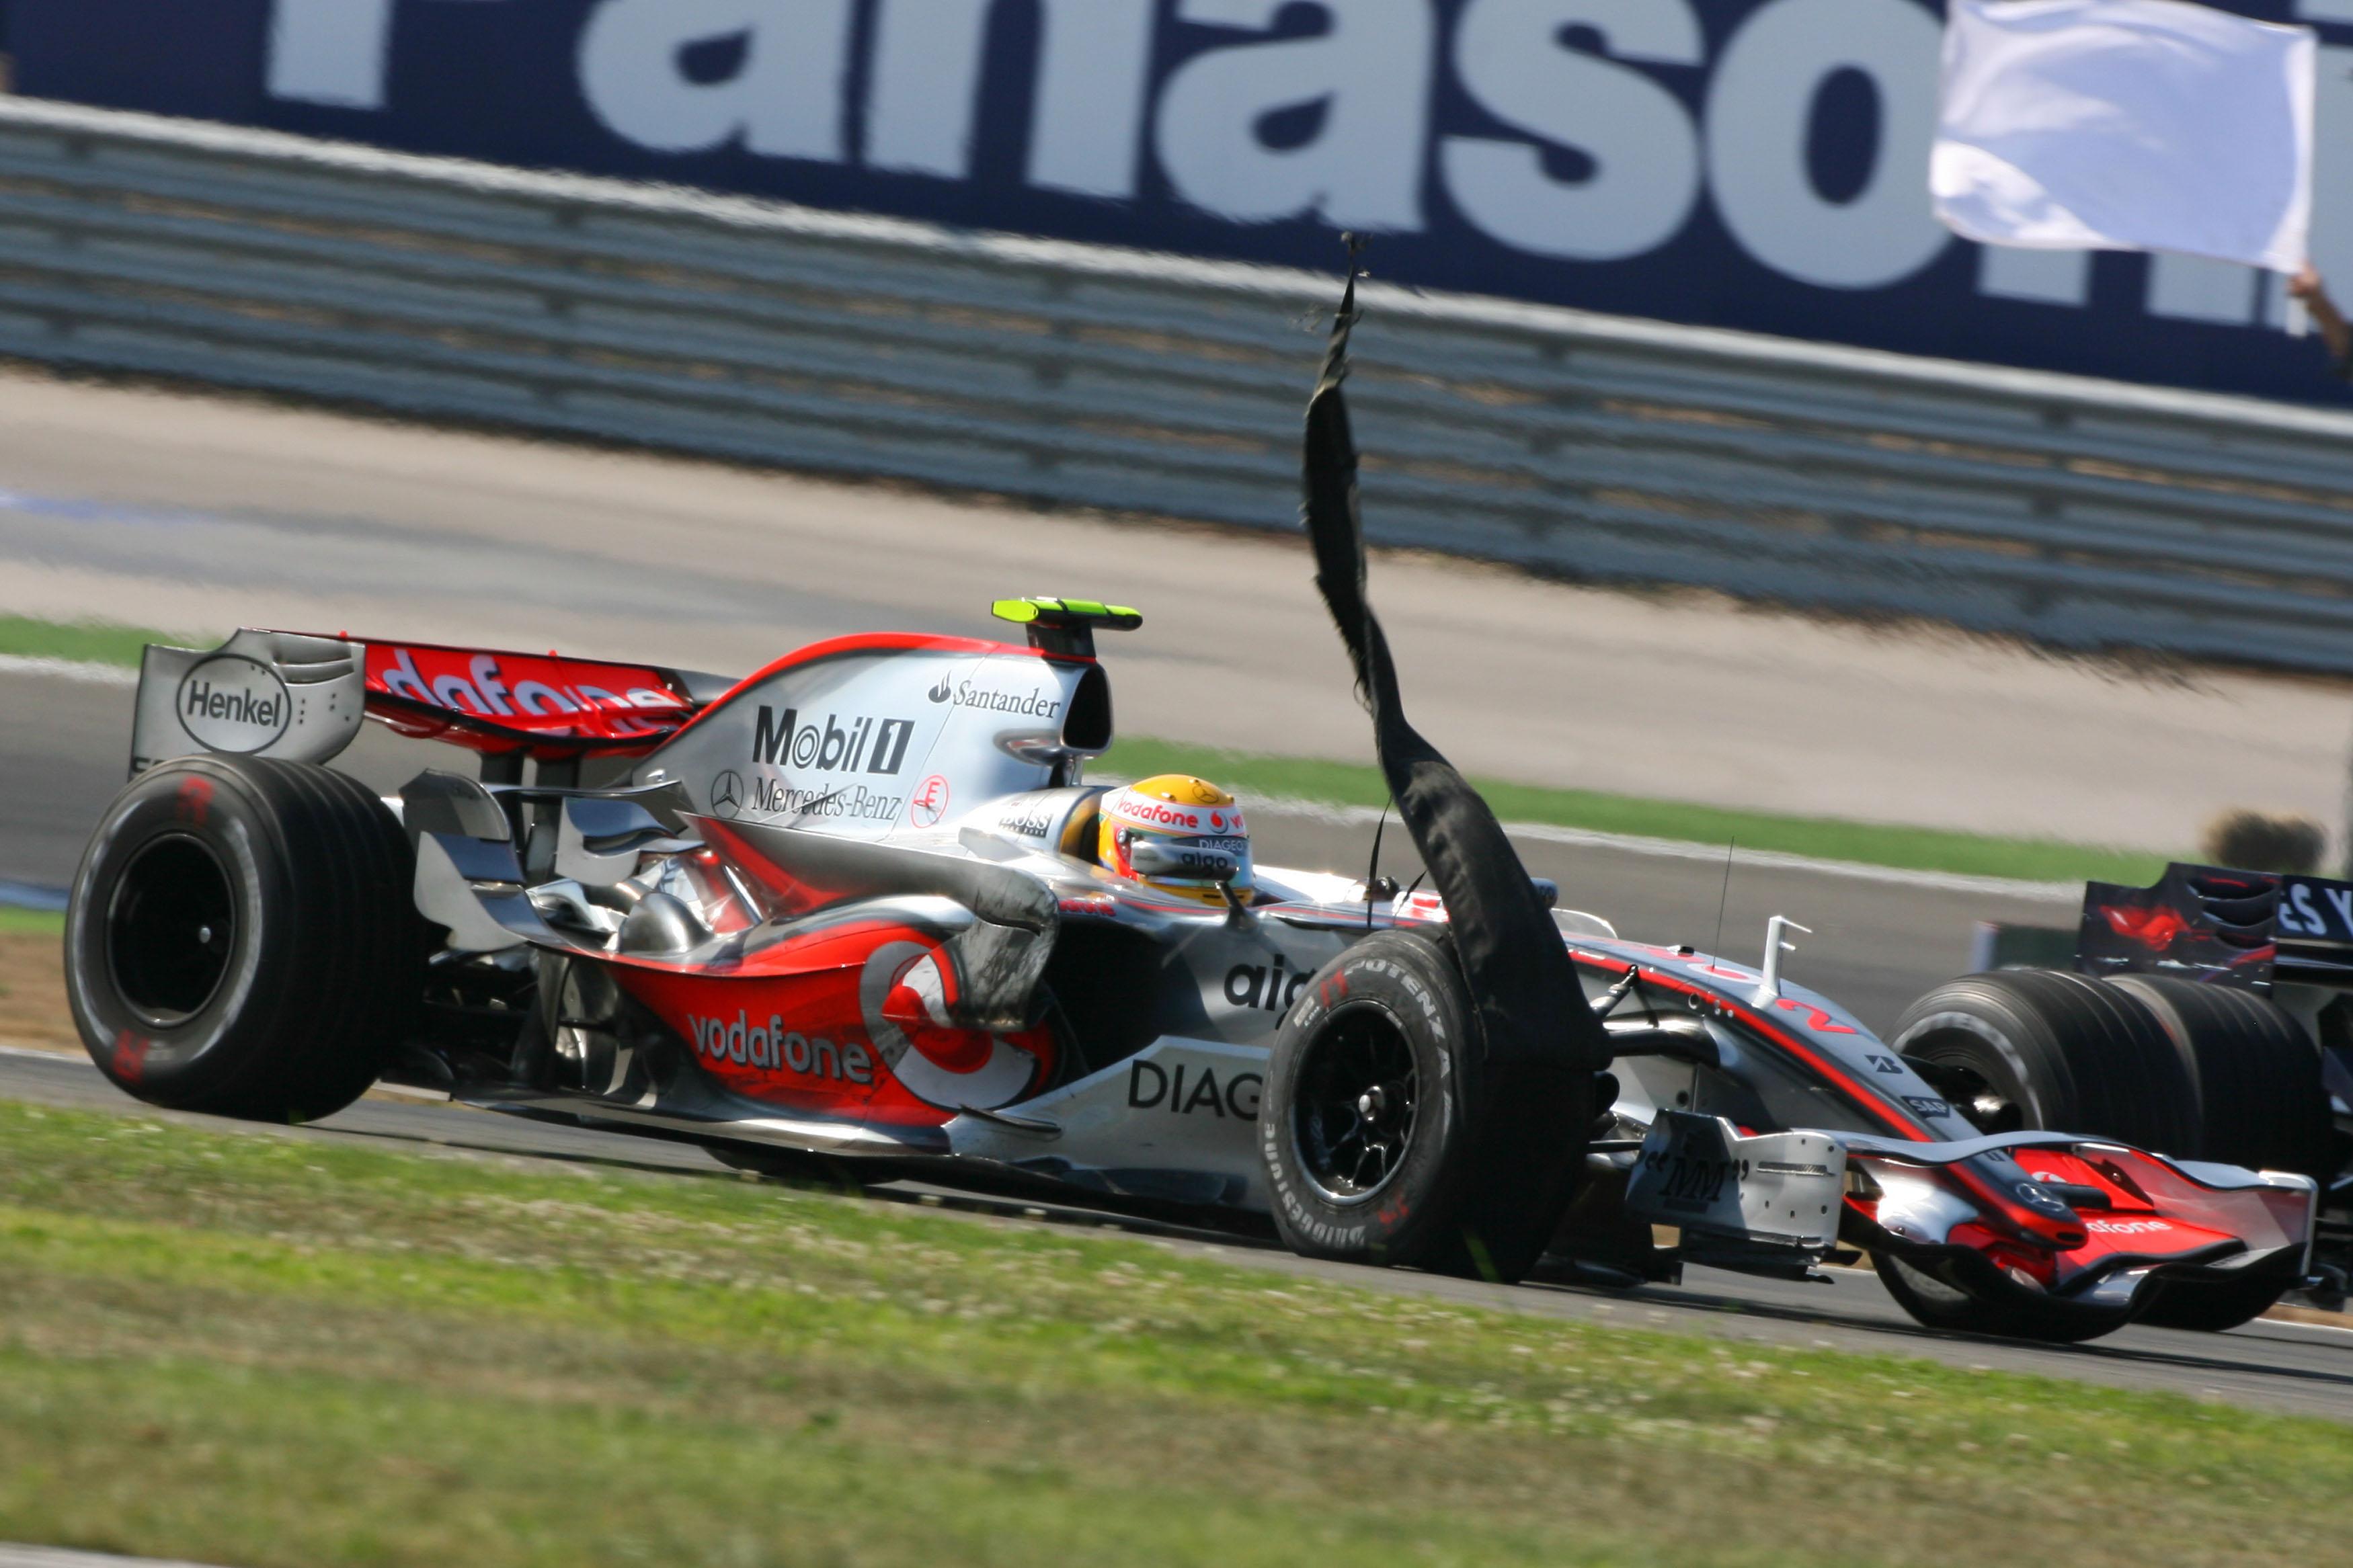 Lewis Hamilton, puncture, Turkish GP 2007, F1